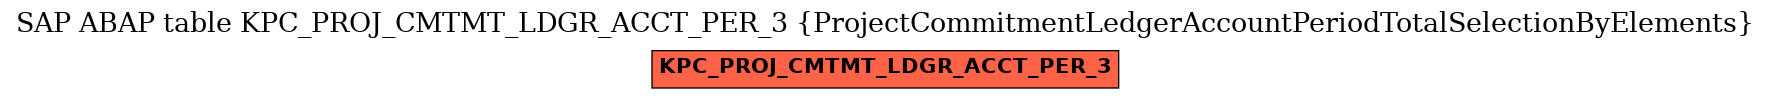 E-R Diagram for table KPC_PROJ_CMTMT_LDGR_ACCT_PER_3 (ProjectCommitmentLedgerAccountPeriodTotalSelectionByElements)